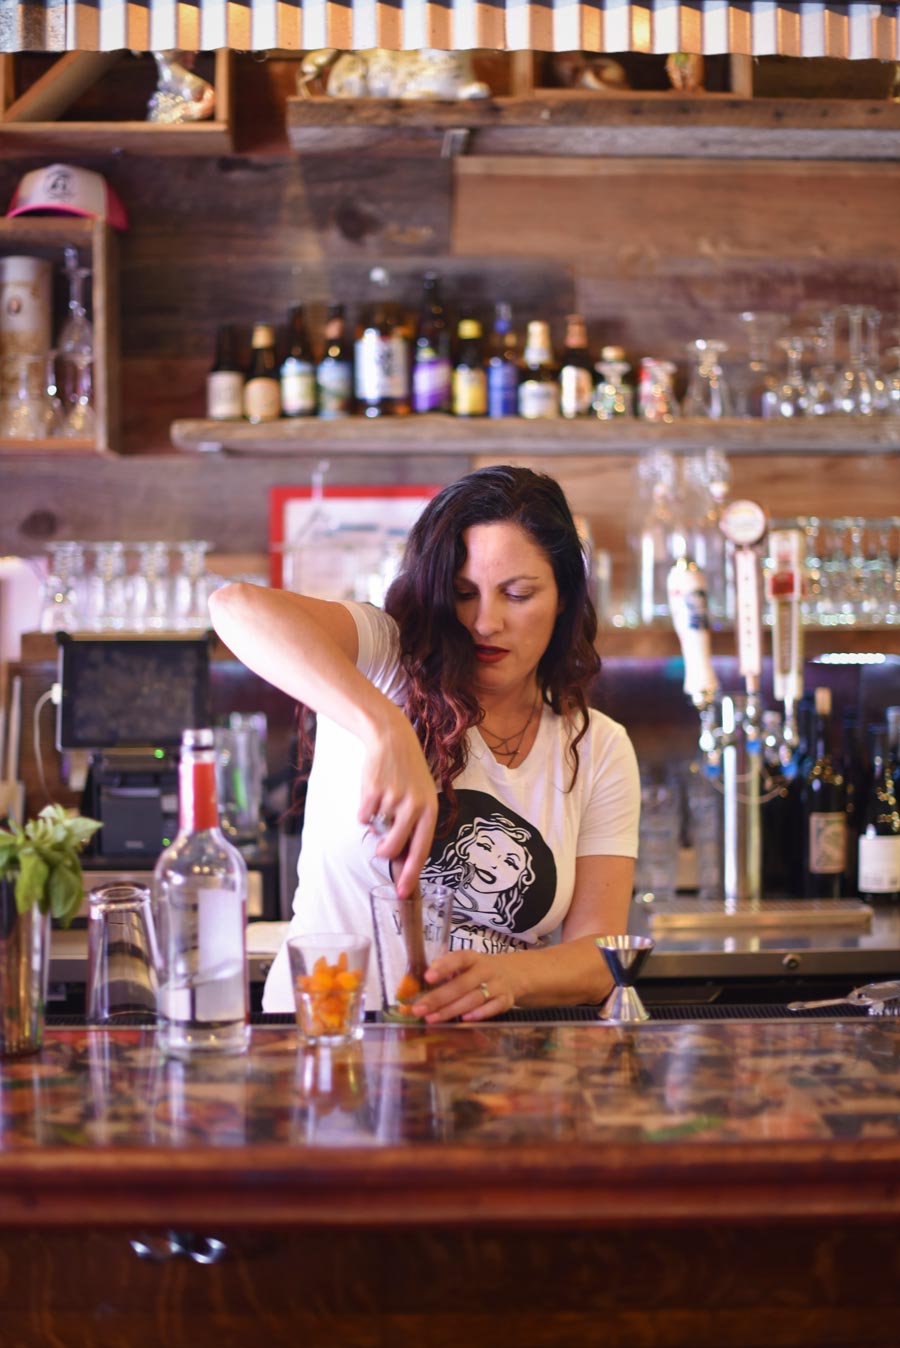 Emmy prepares a kumquat cocktail at the bar 